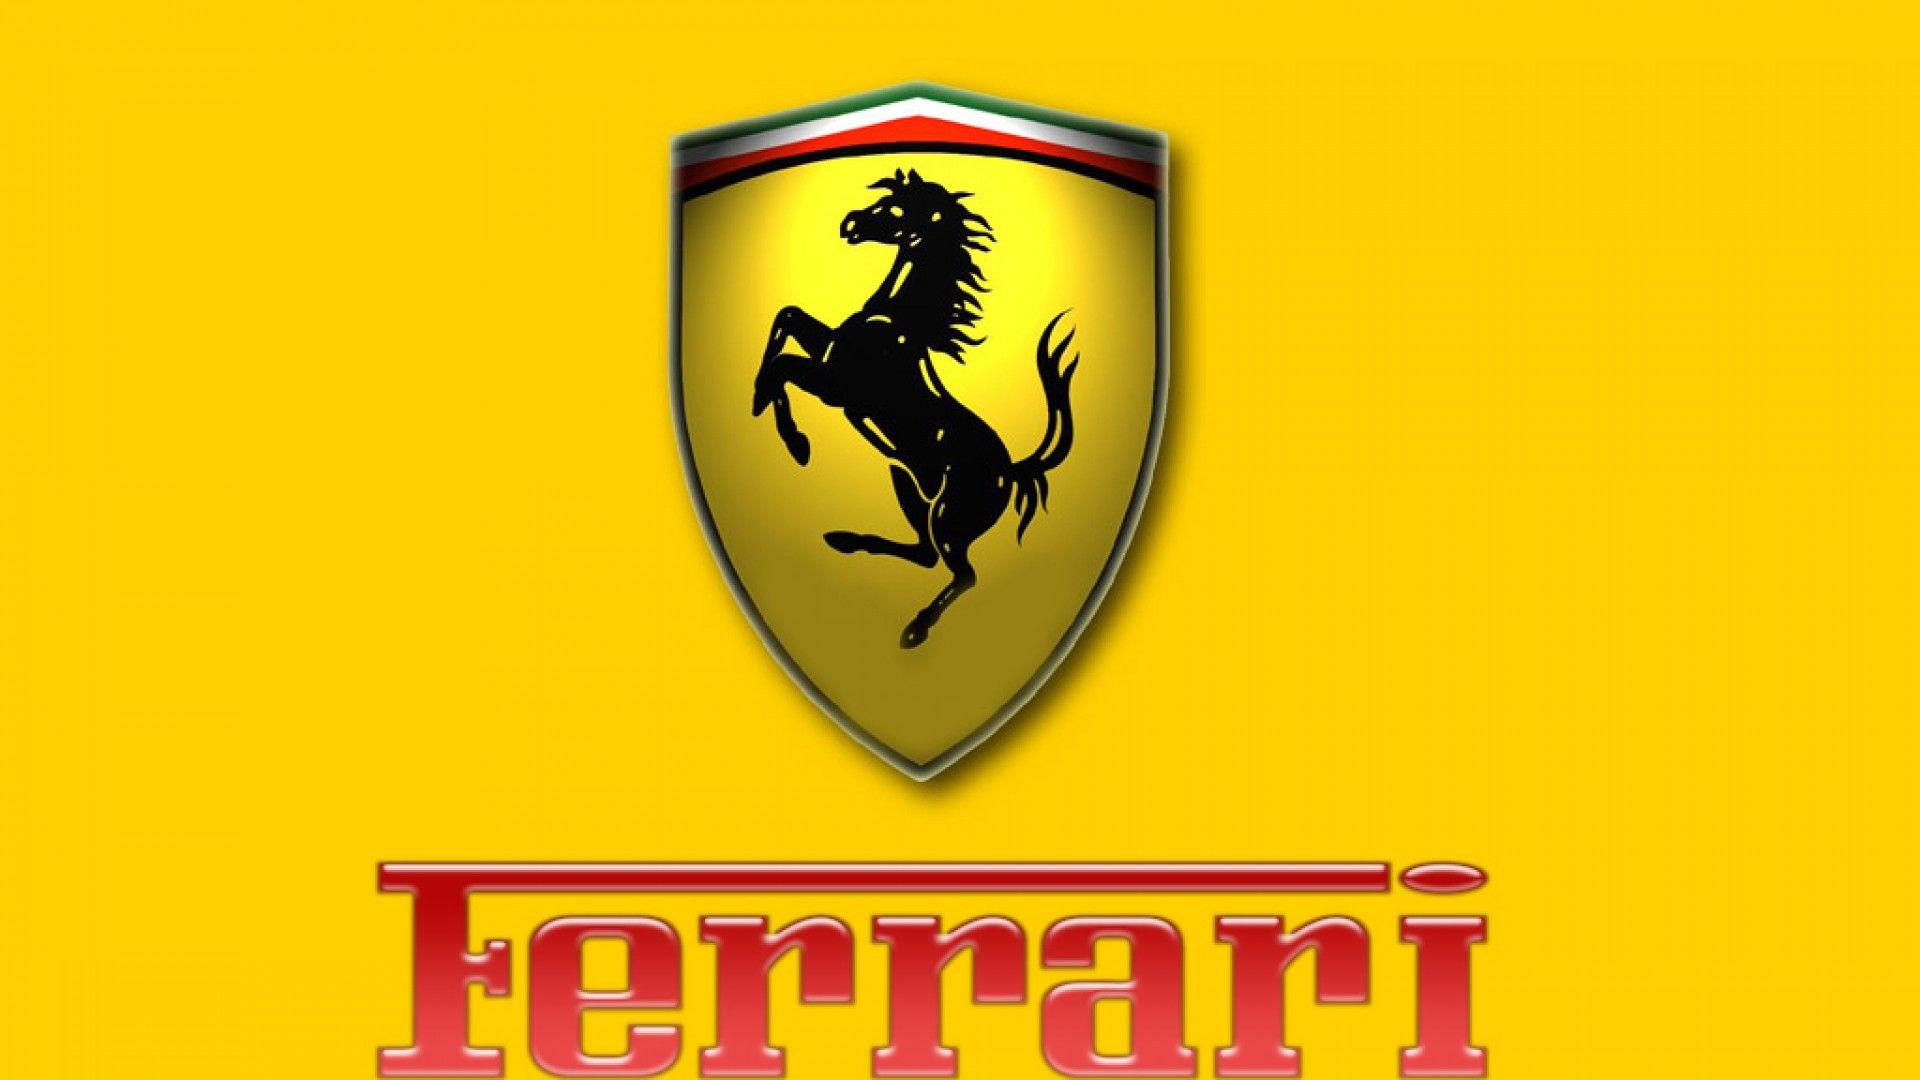 Ferrari Badge Wallpapers  Wallpaper Cave